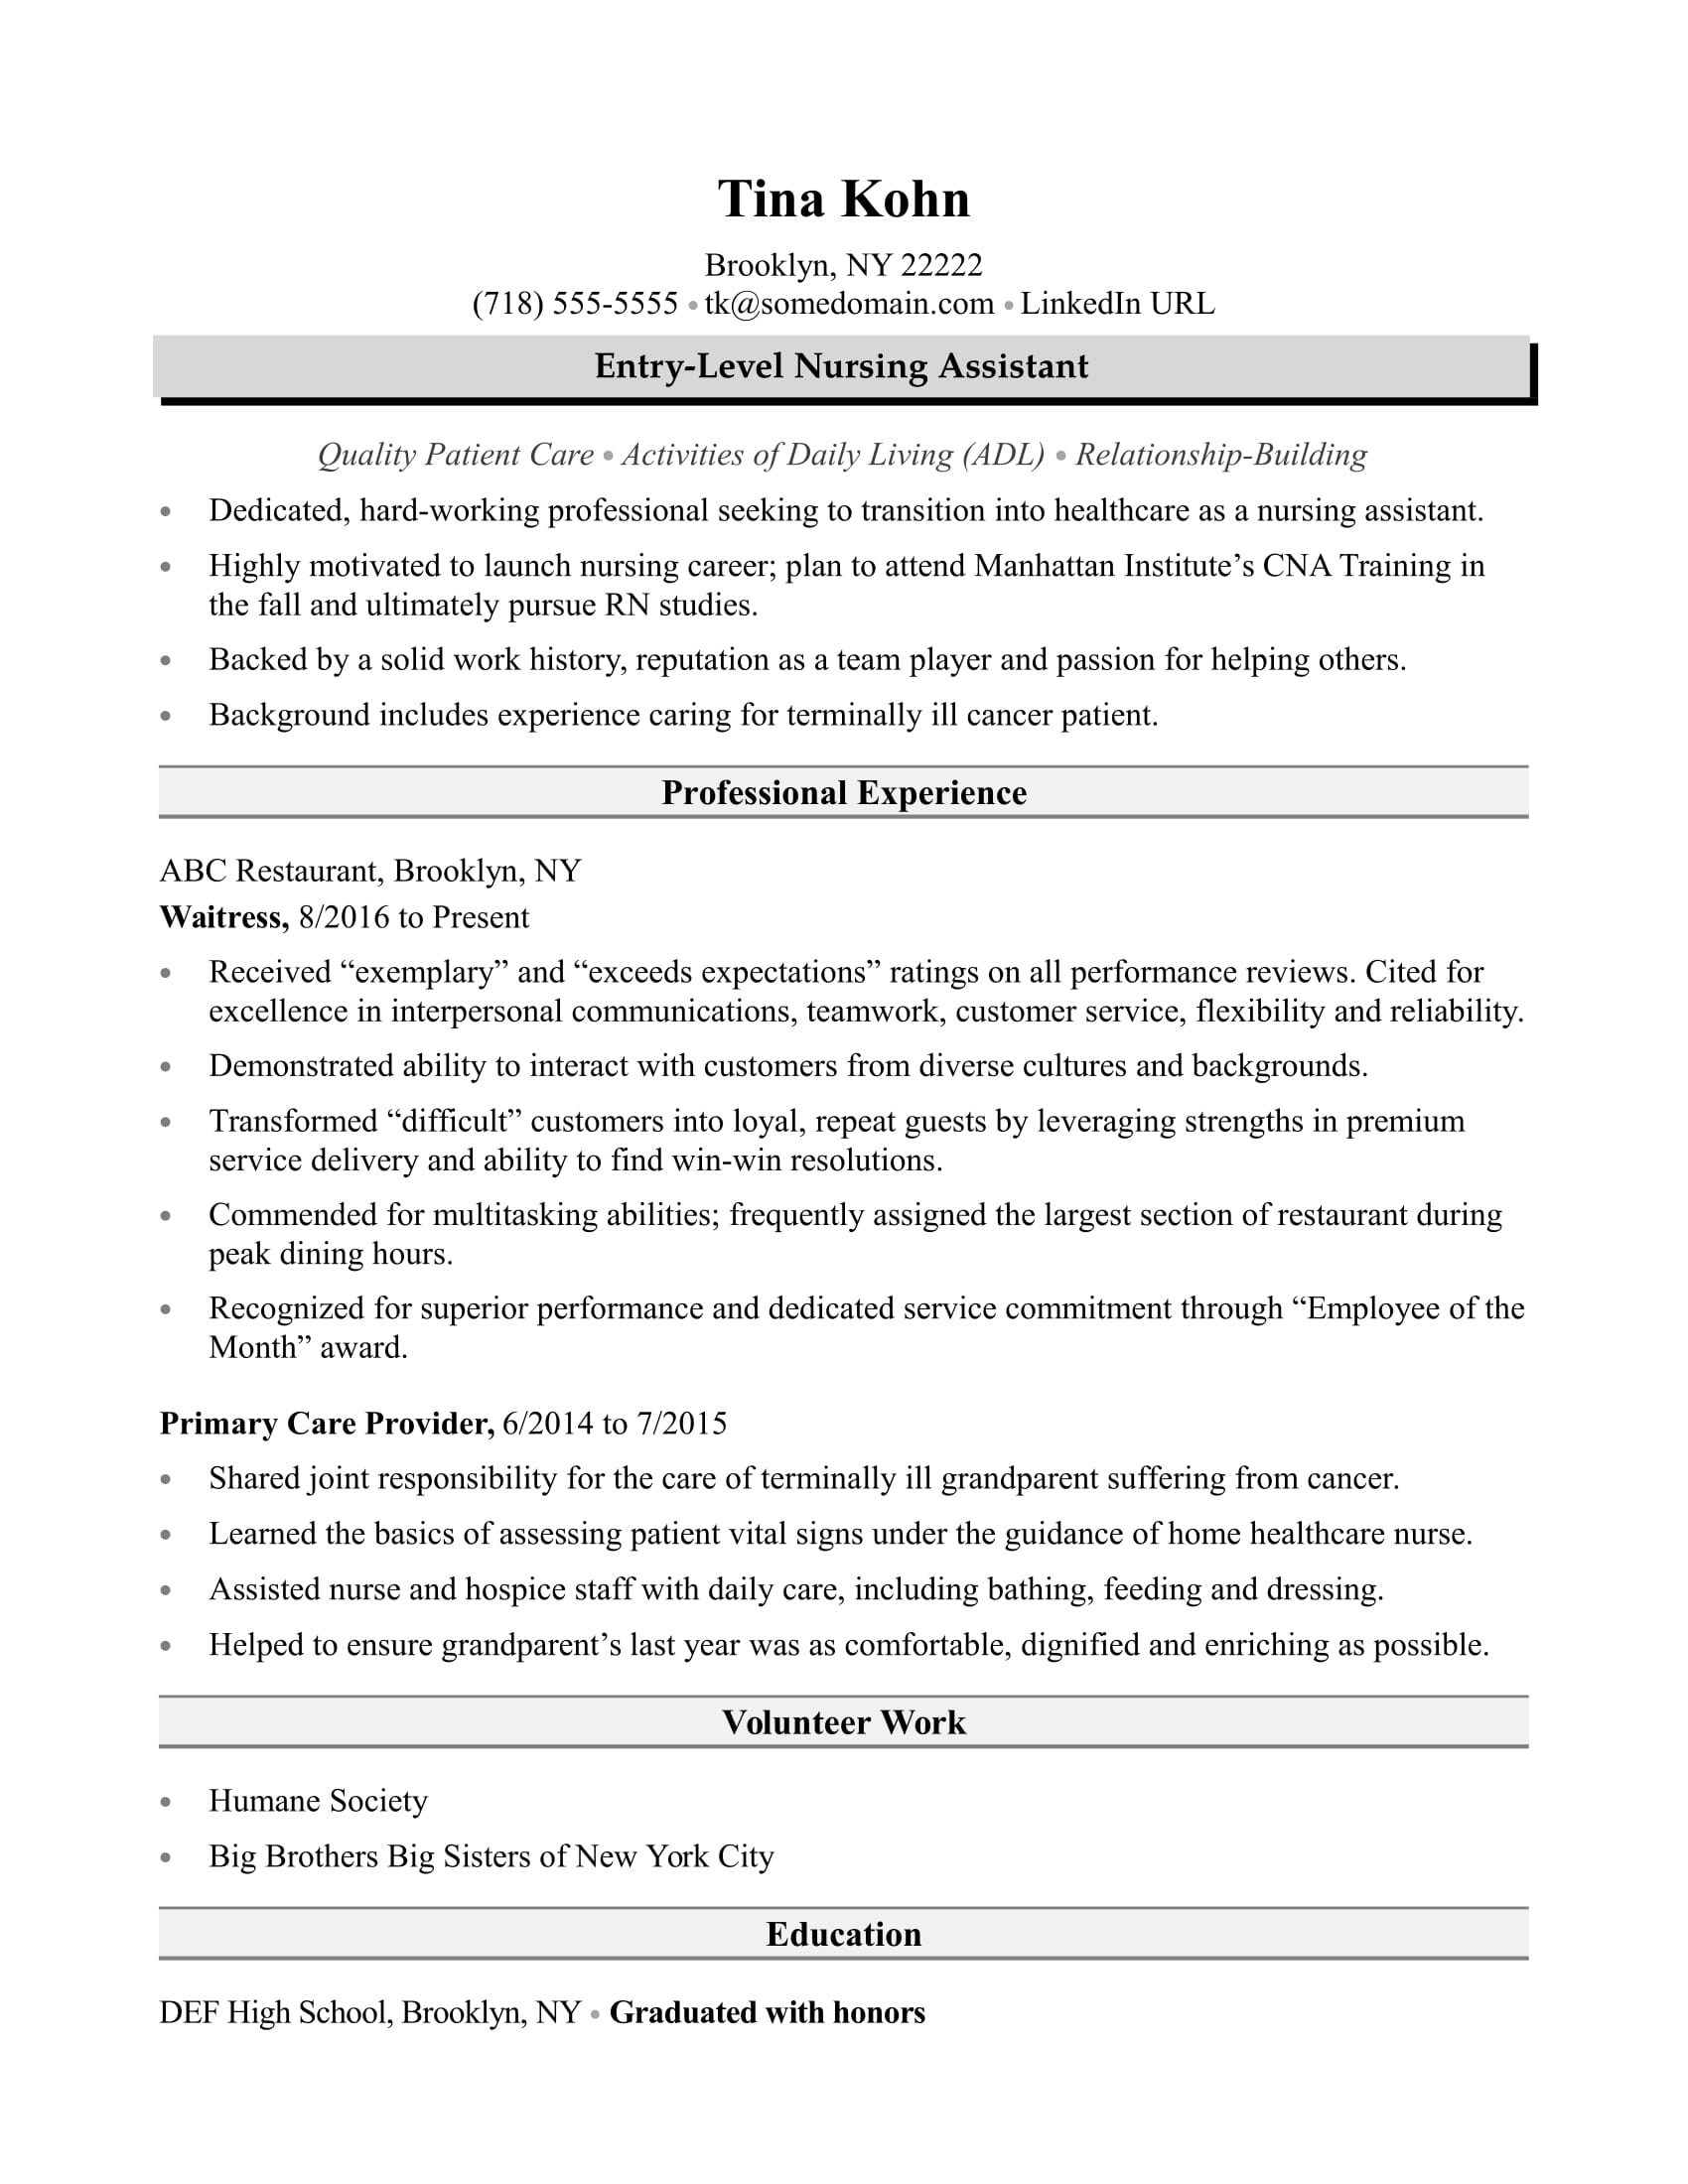 Samples Of Entry Level Resumes for Rn Nursing assistant Resume Sample Monster.com